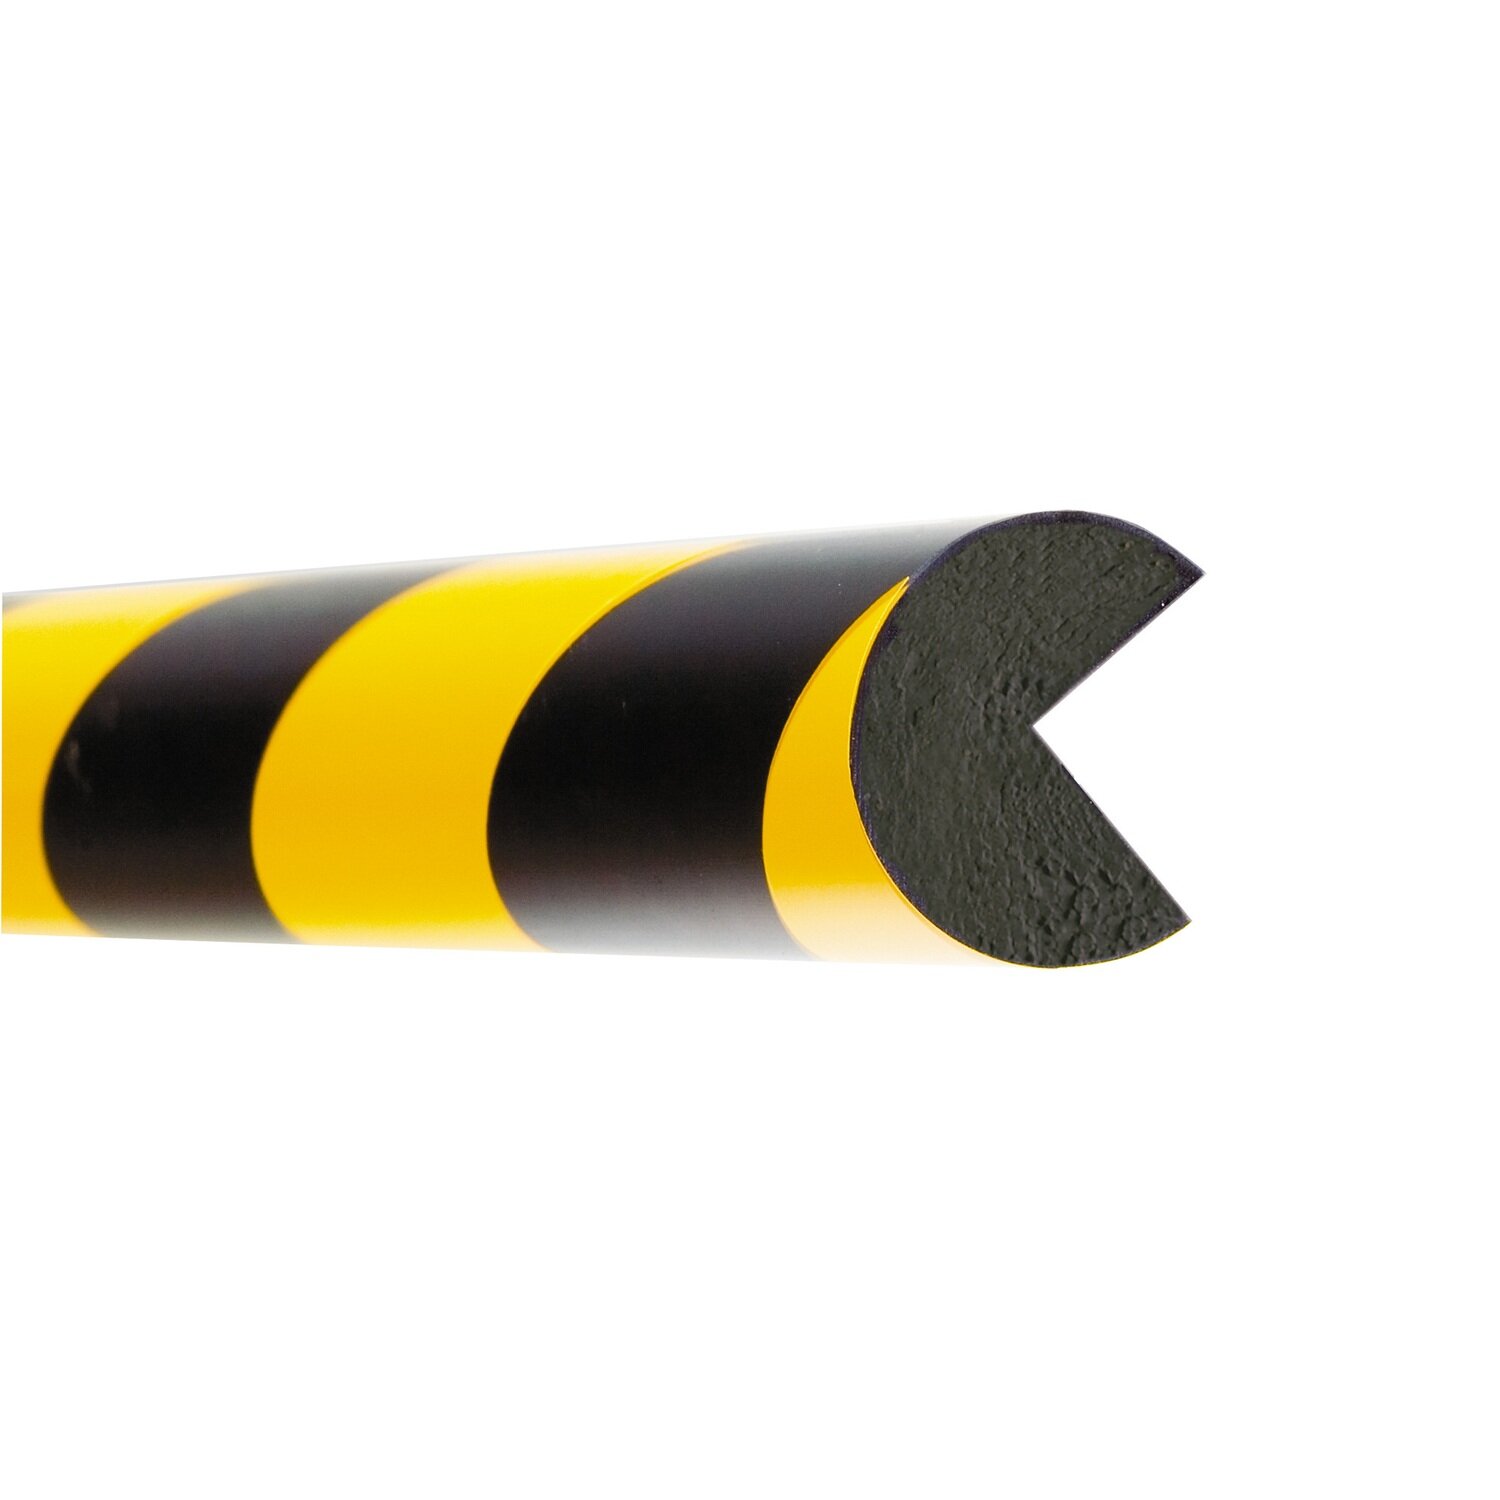 MORION stootbanden Cirkel 40x40mm, magnetisch, geel/zwart.